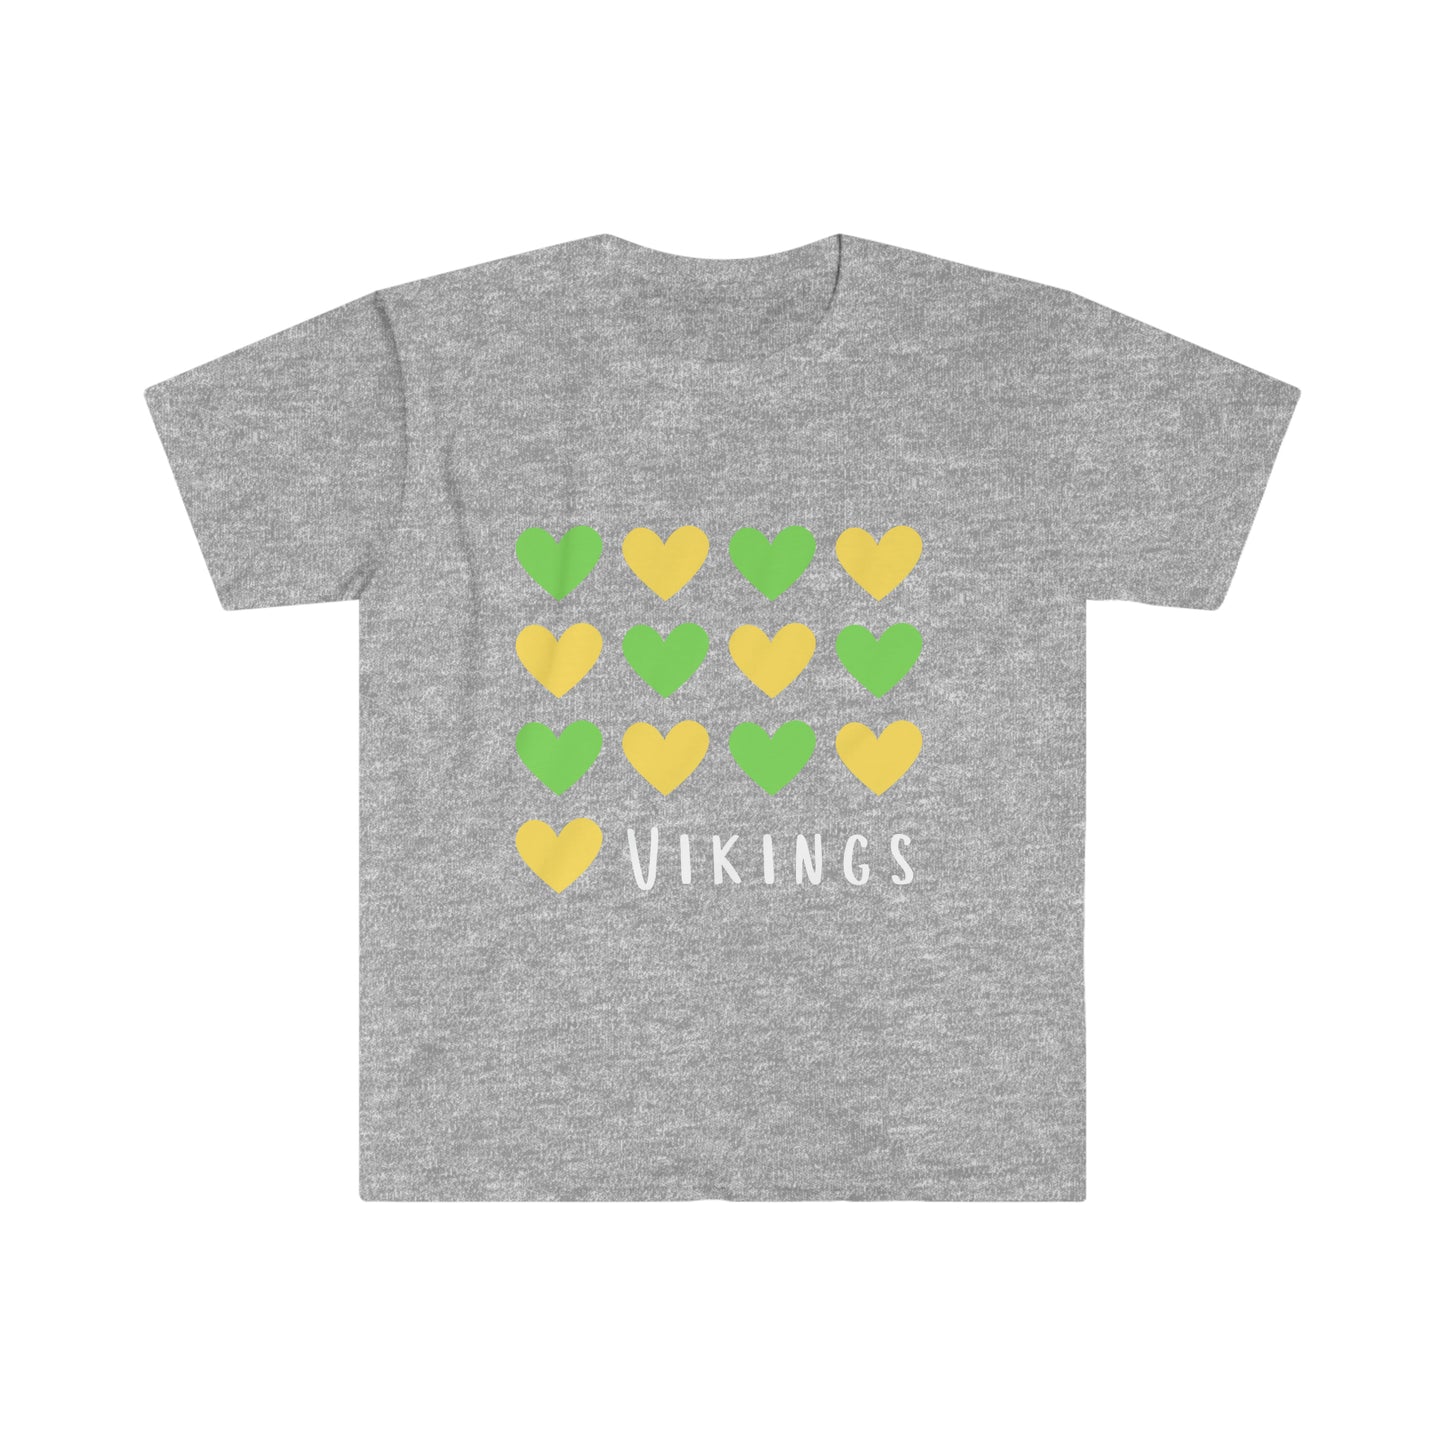 I HEART Vikings - Adult T-Shirt